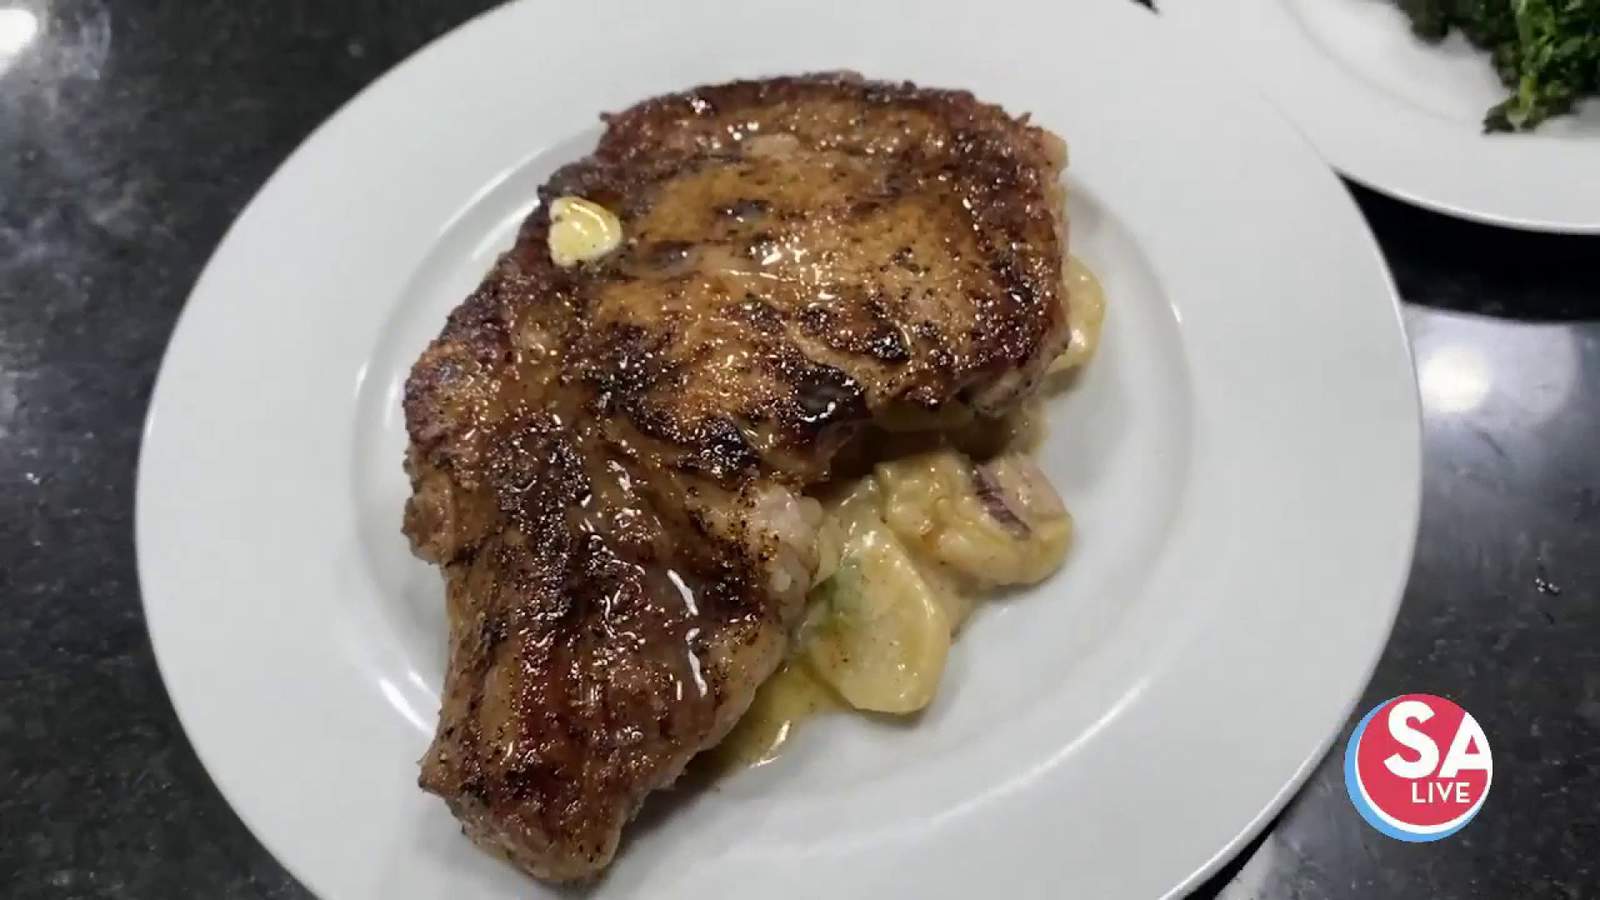 Recipe: Steak & potatoes from a star San Antonio chef